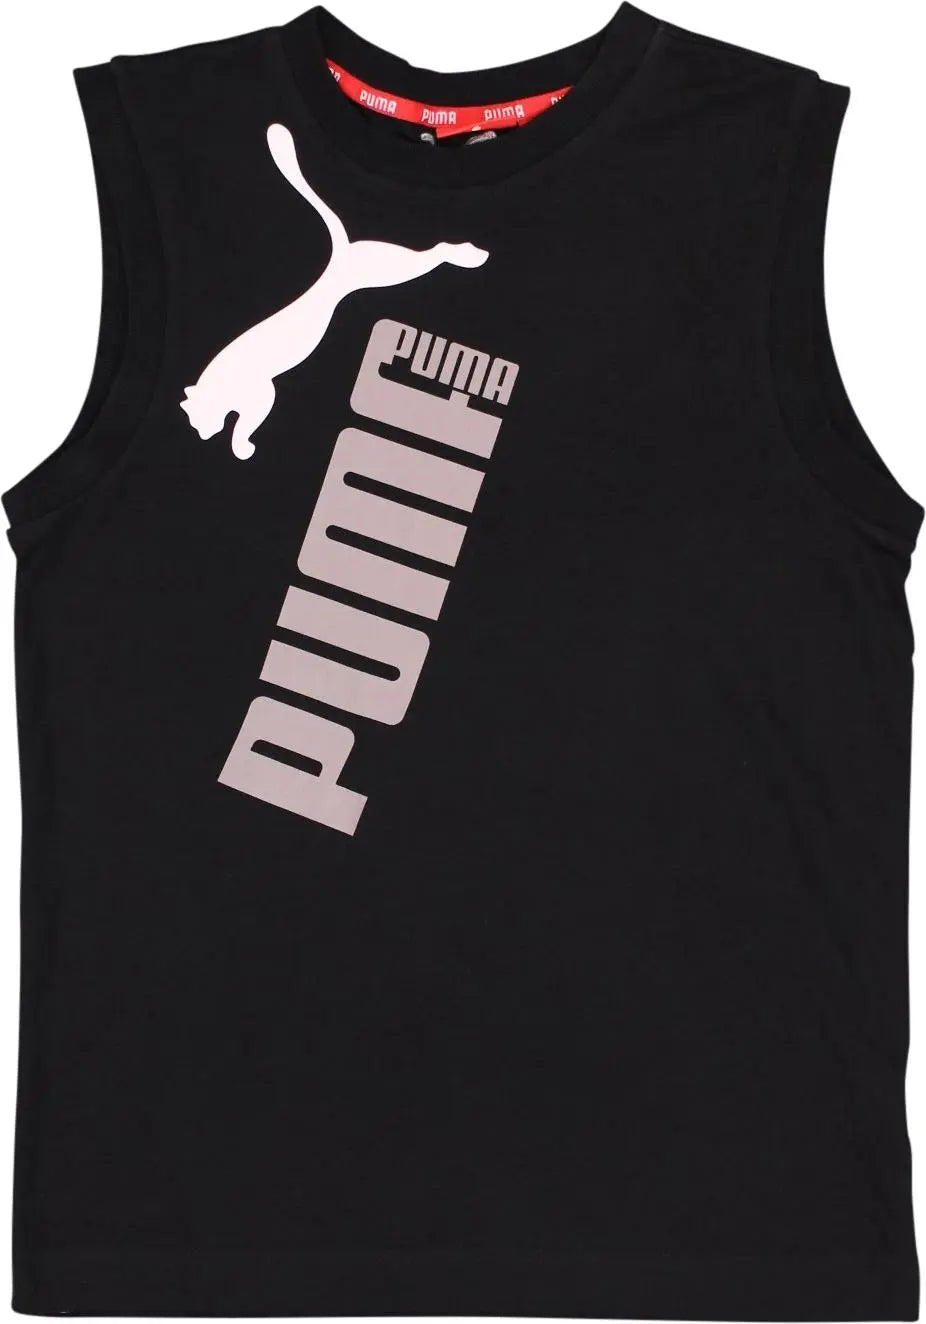 Puma - Puma Top- ThriftTale.com - Vintage and second handclothing